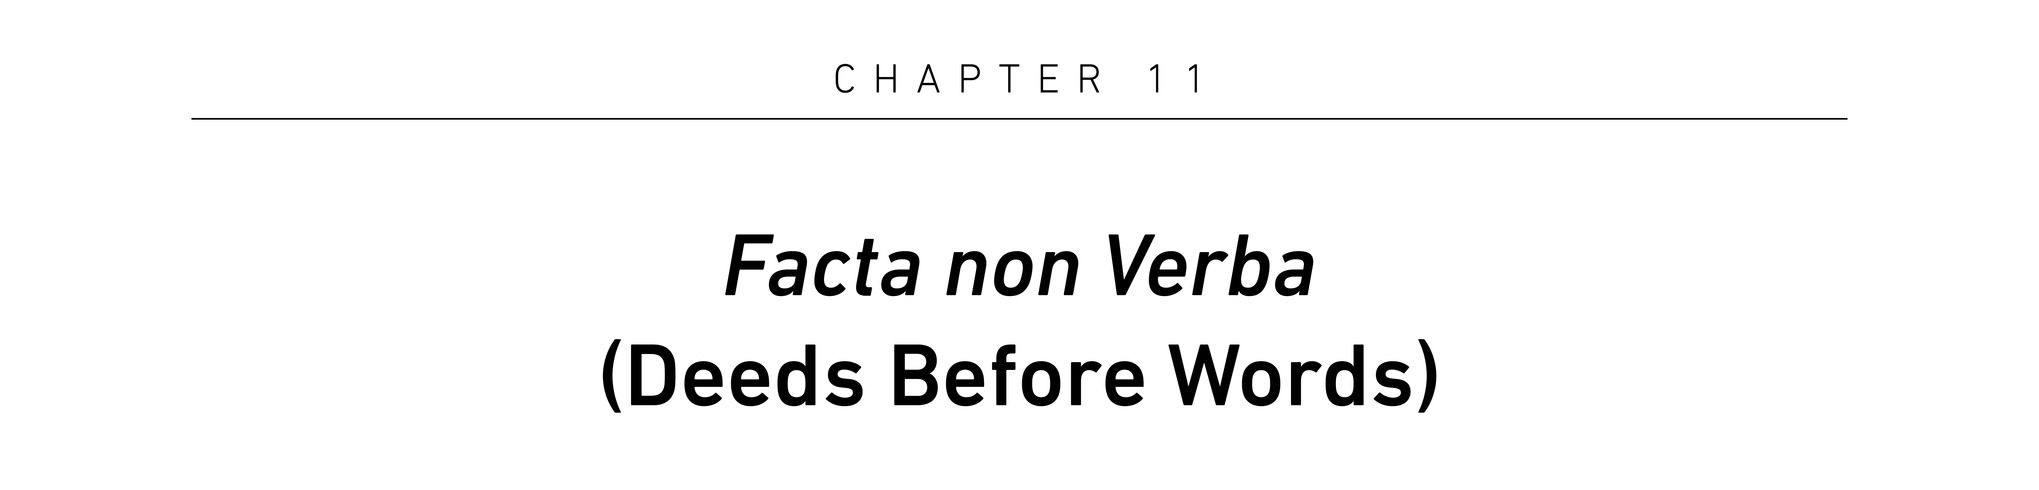 Chapter 11 Facta non Verba (Deeds Before Words)